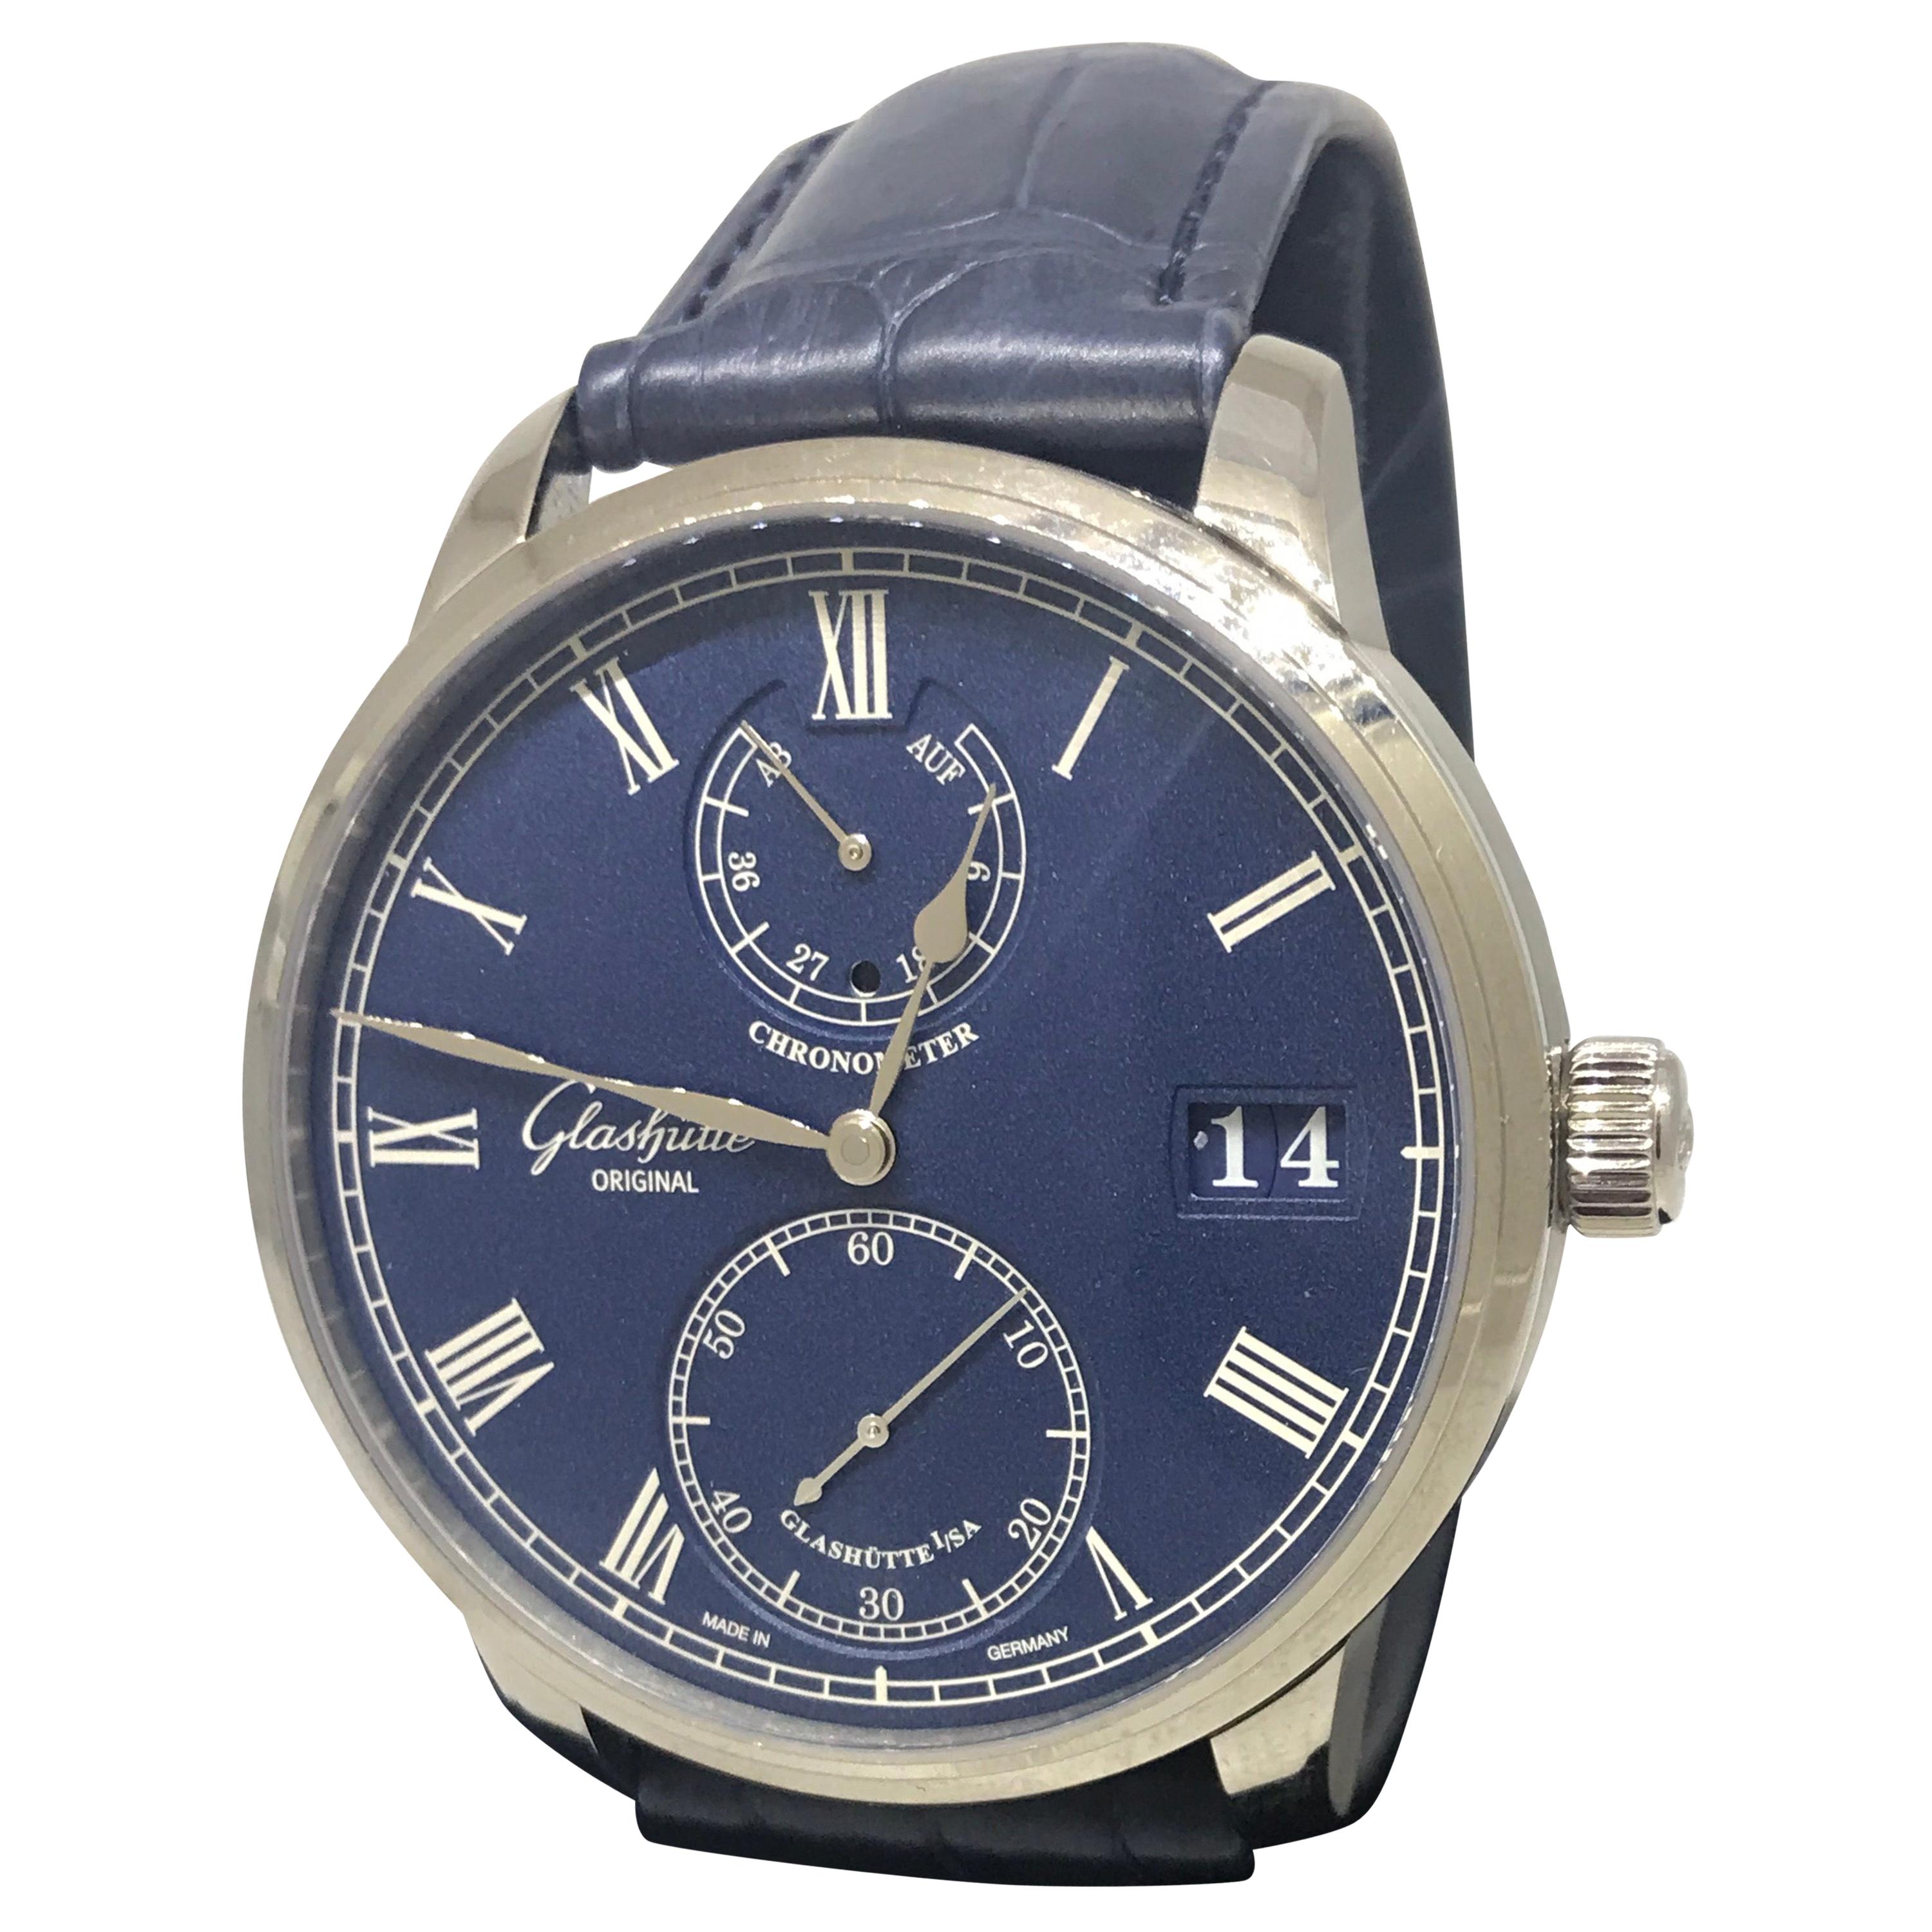 Glashutte Original Senator Chronometer Men's Watch 1-58-01-05-34-30 For Sale